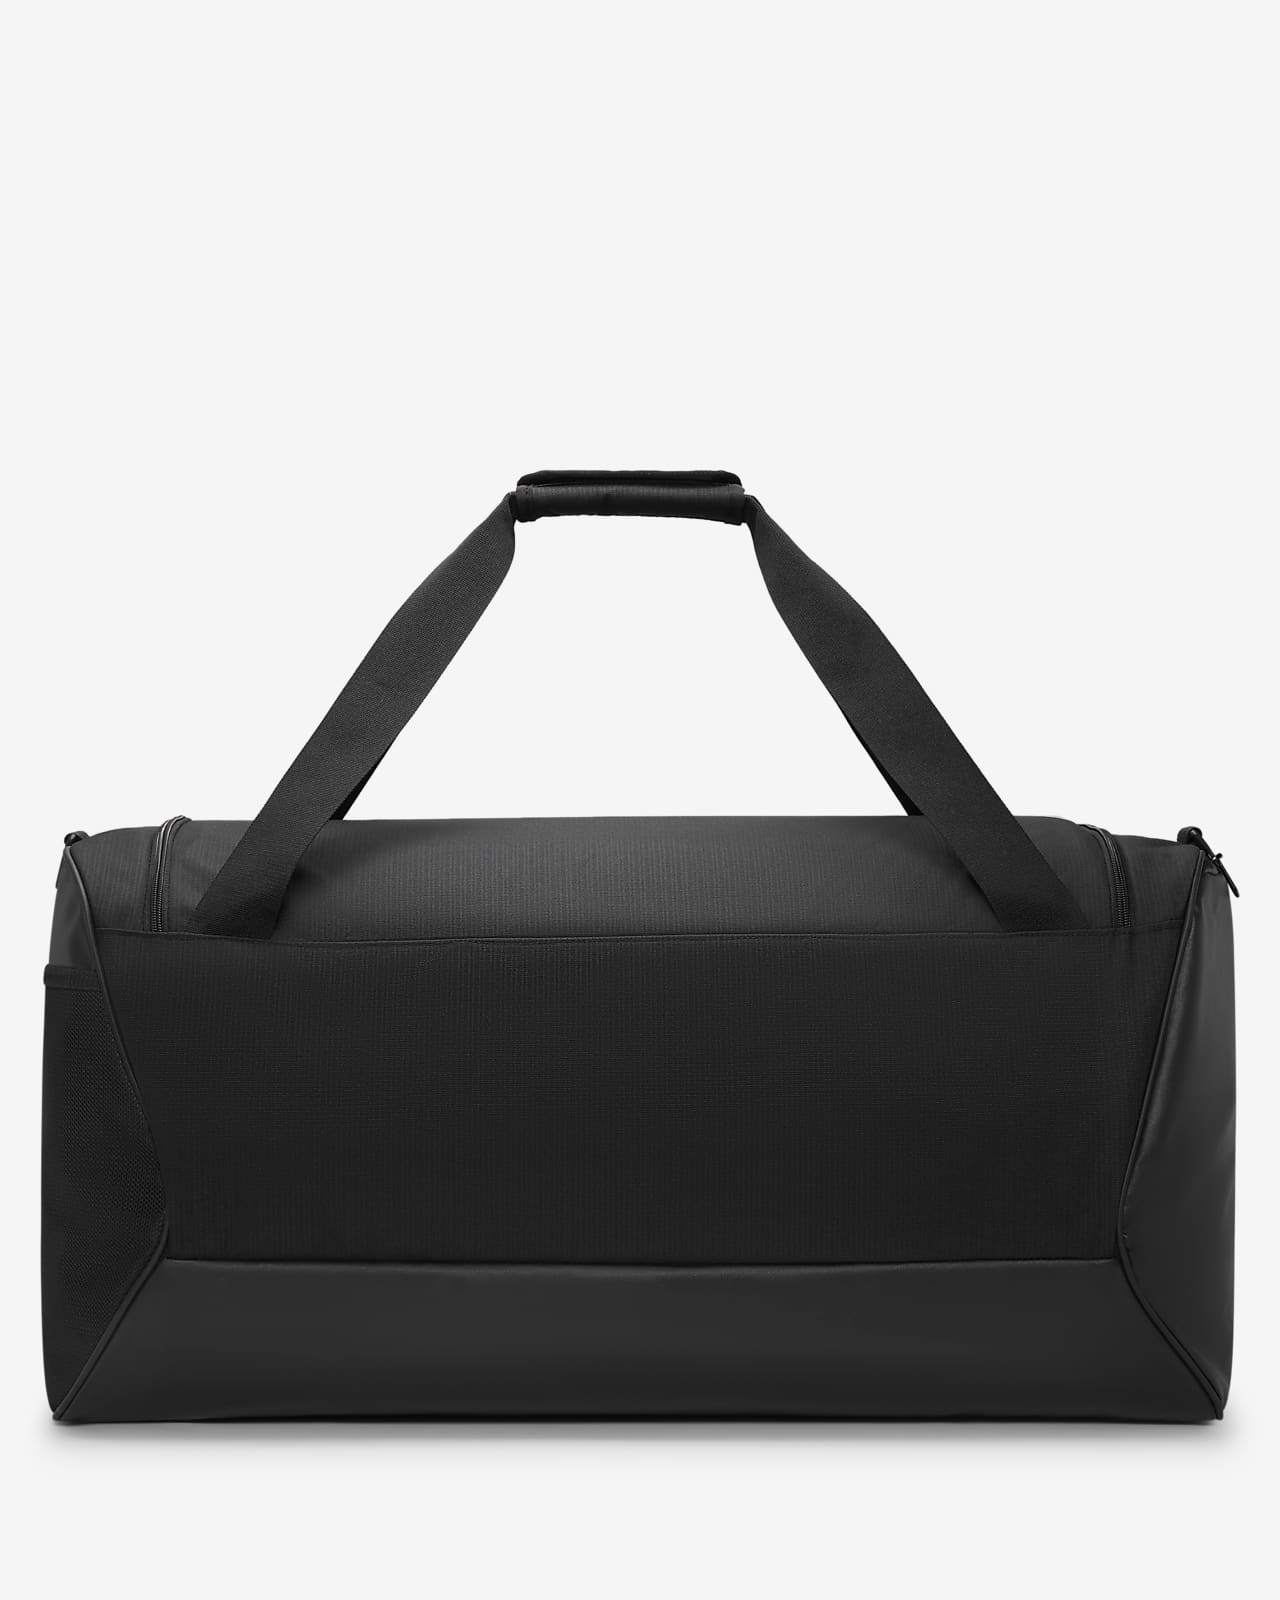 NIKE Brasilia Duffel Bag, Black/Black/White, Large 